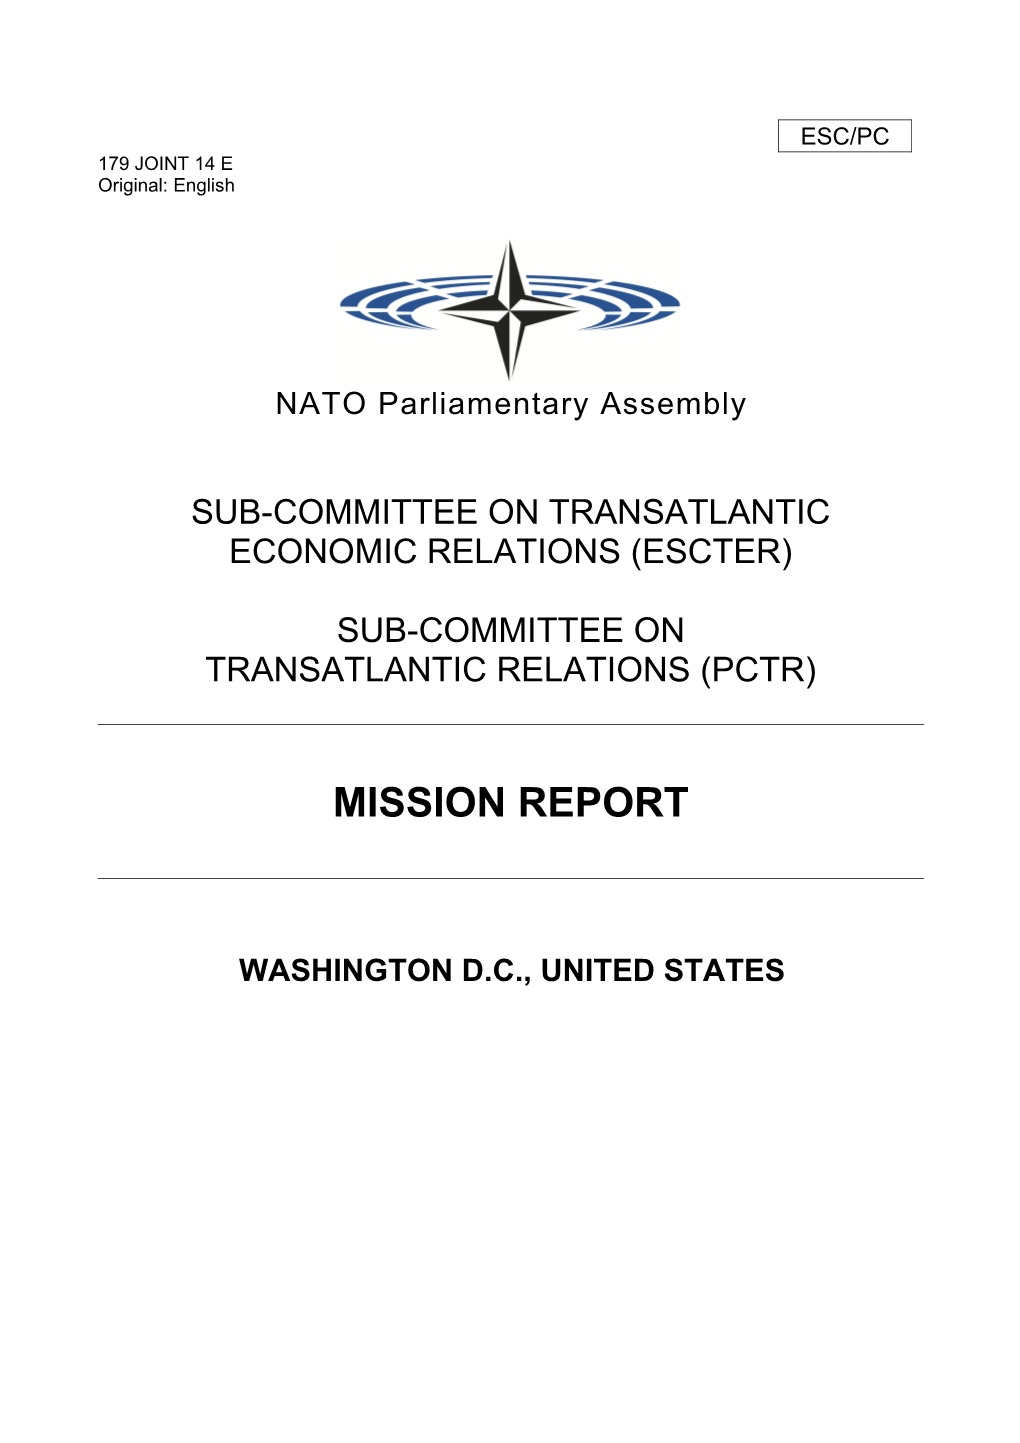 Sub-Committee on Transatlantic Economic Relations (Escter)